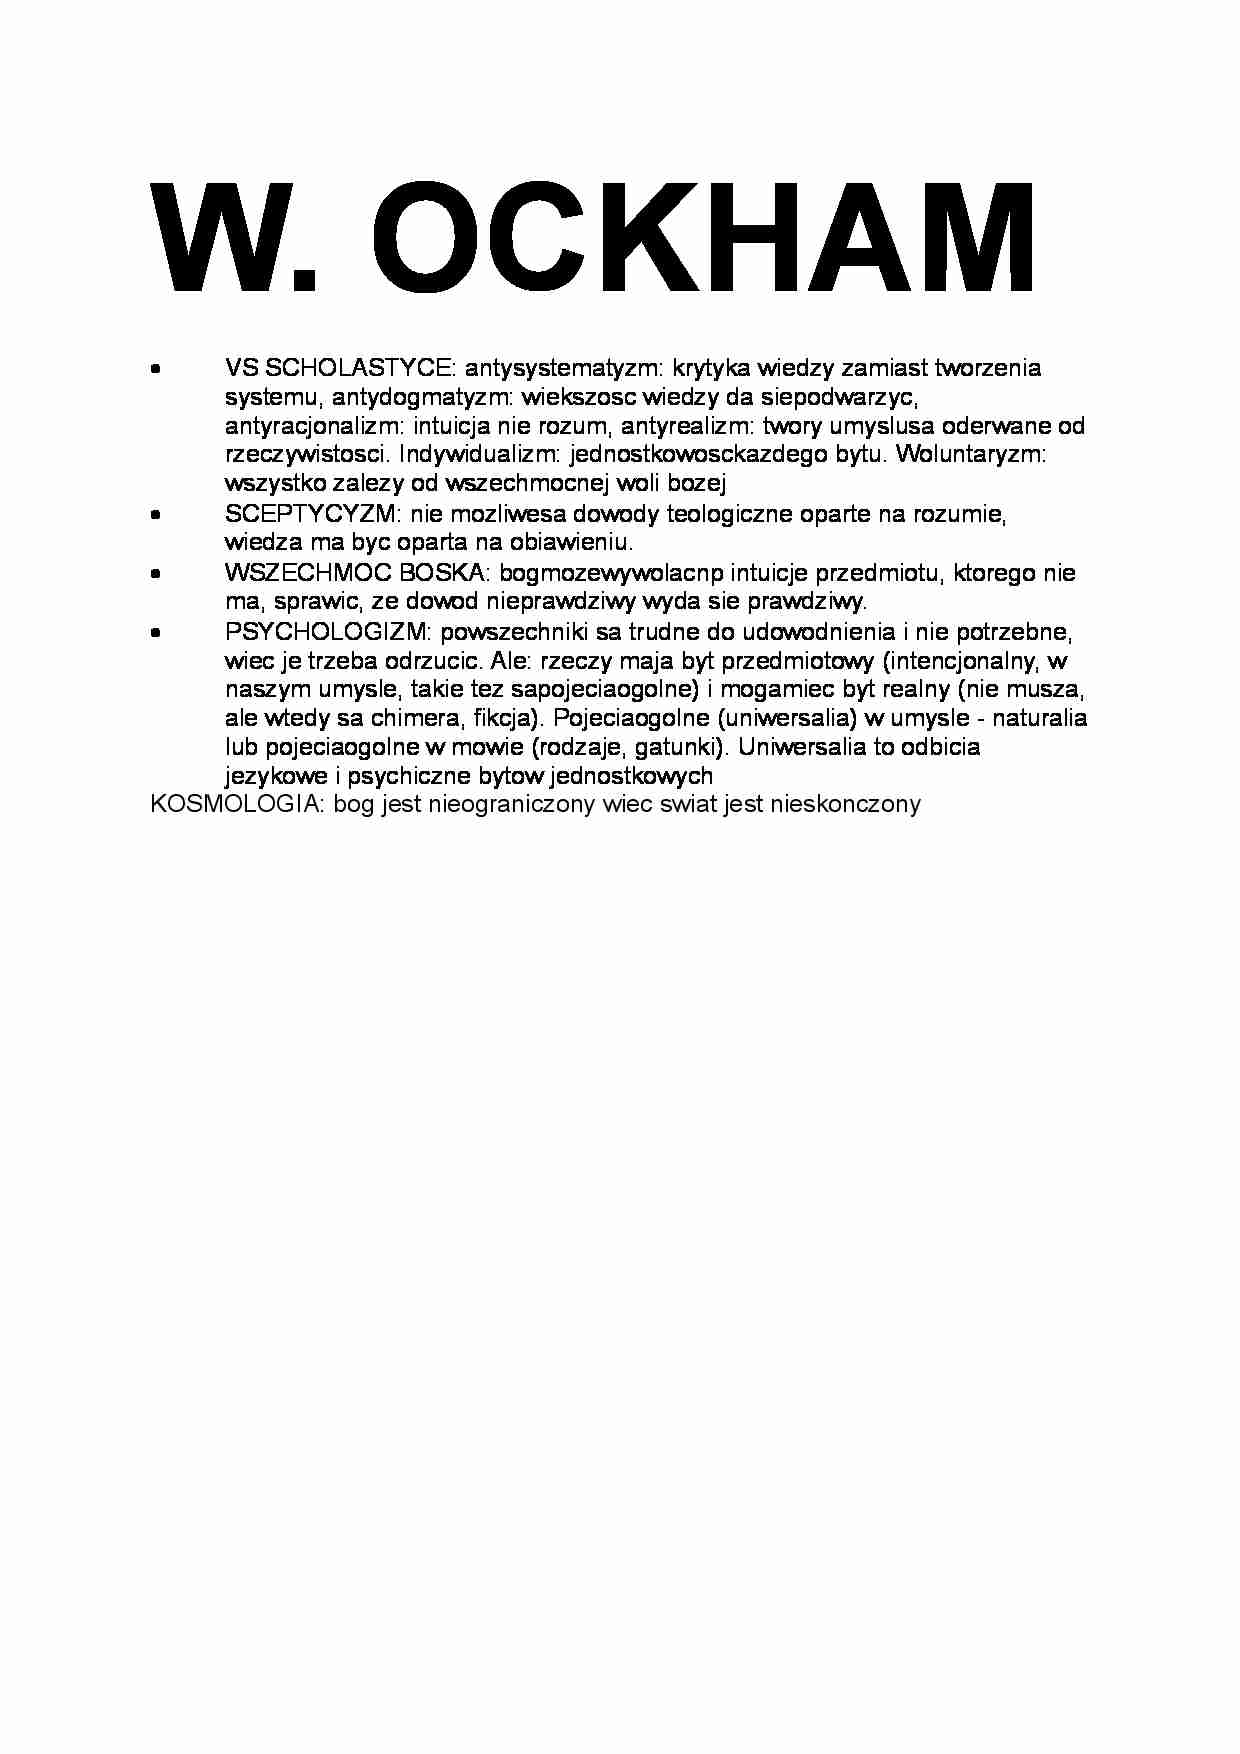 William Ockham - charakterystyka - strona 1